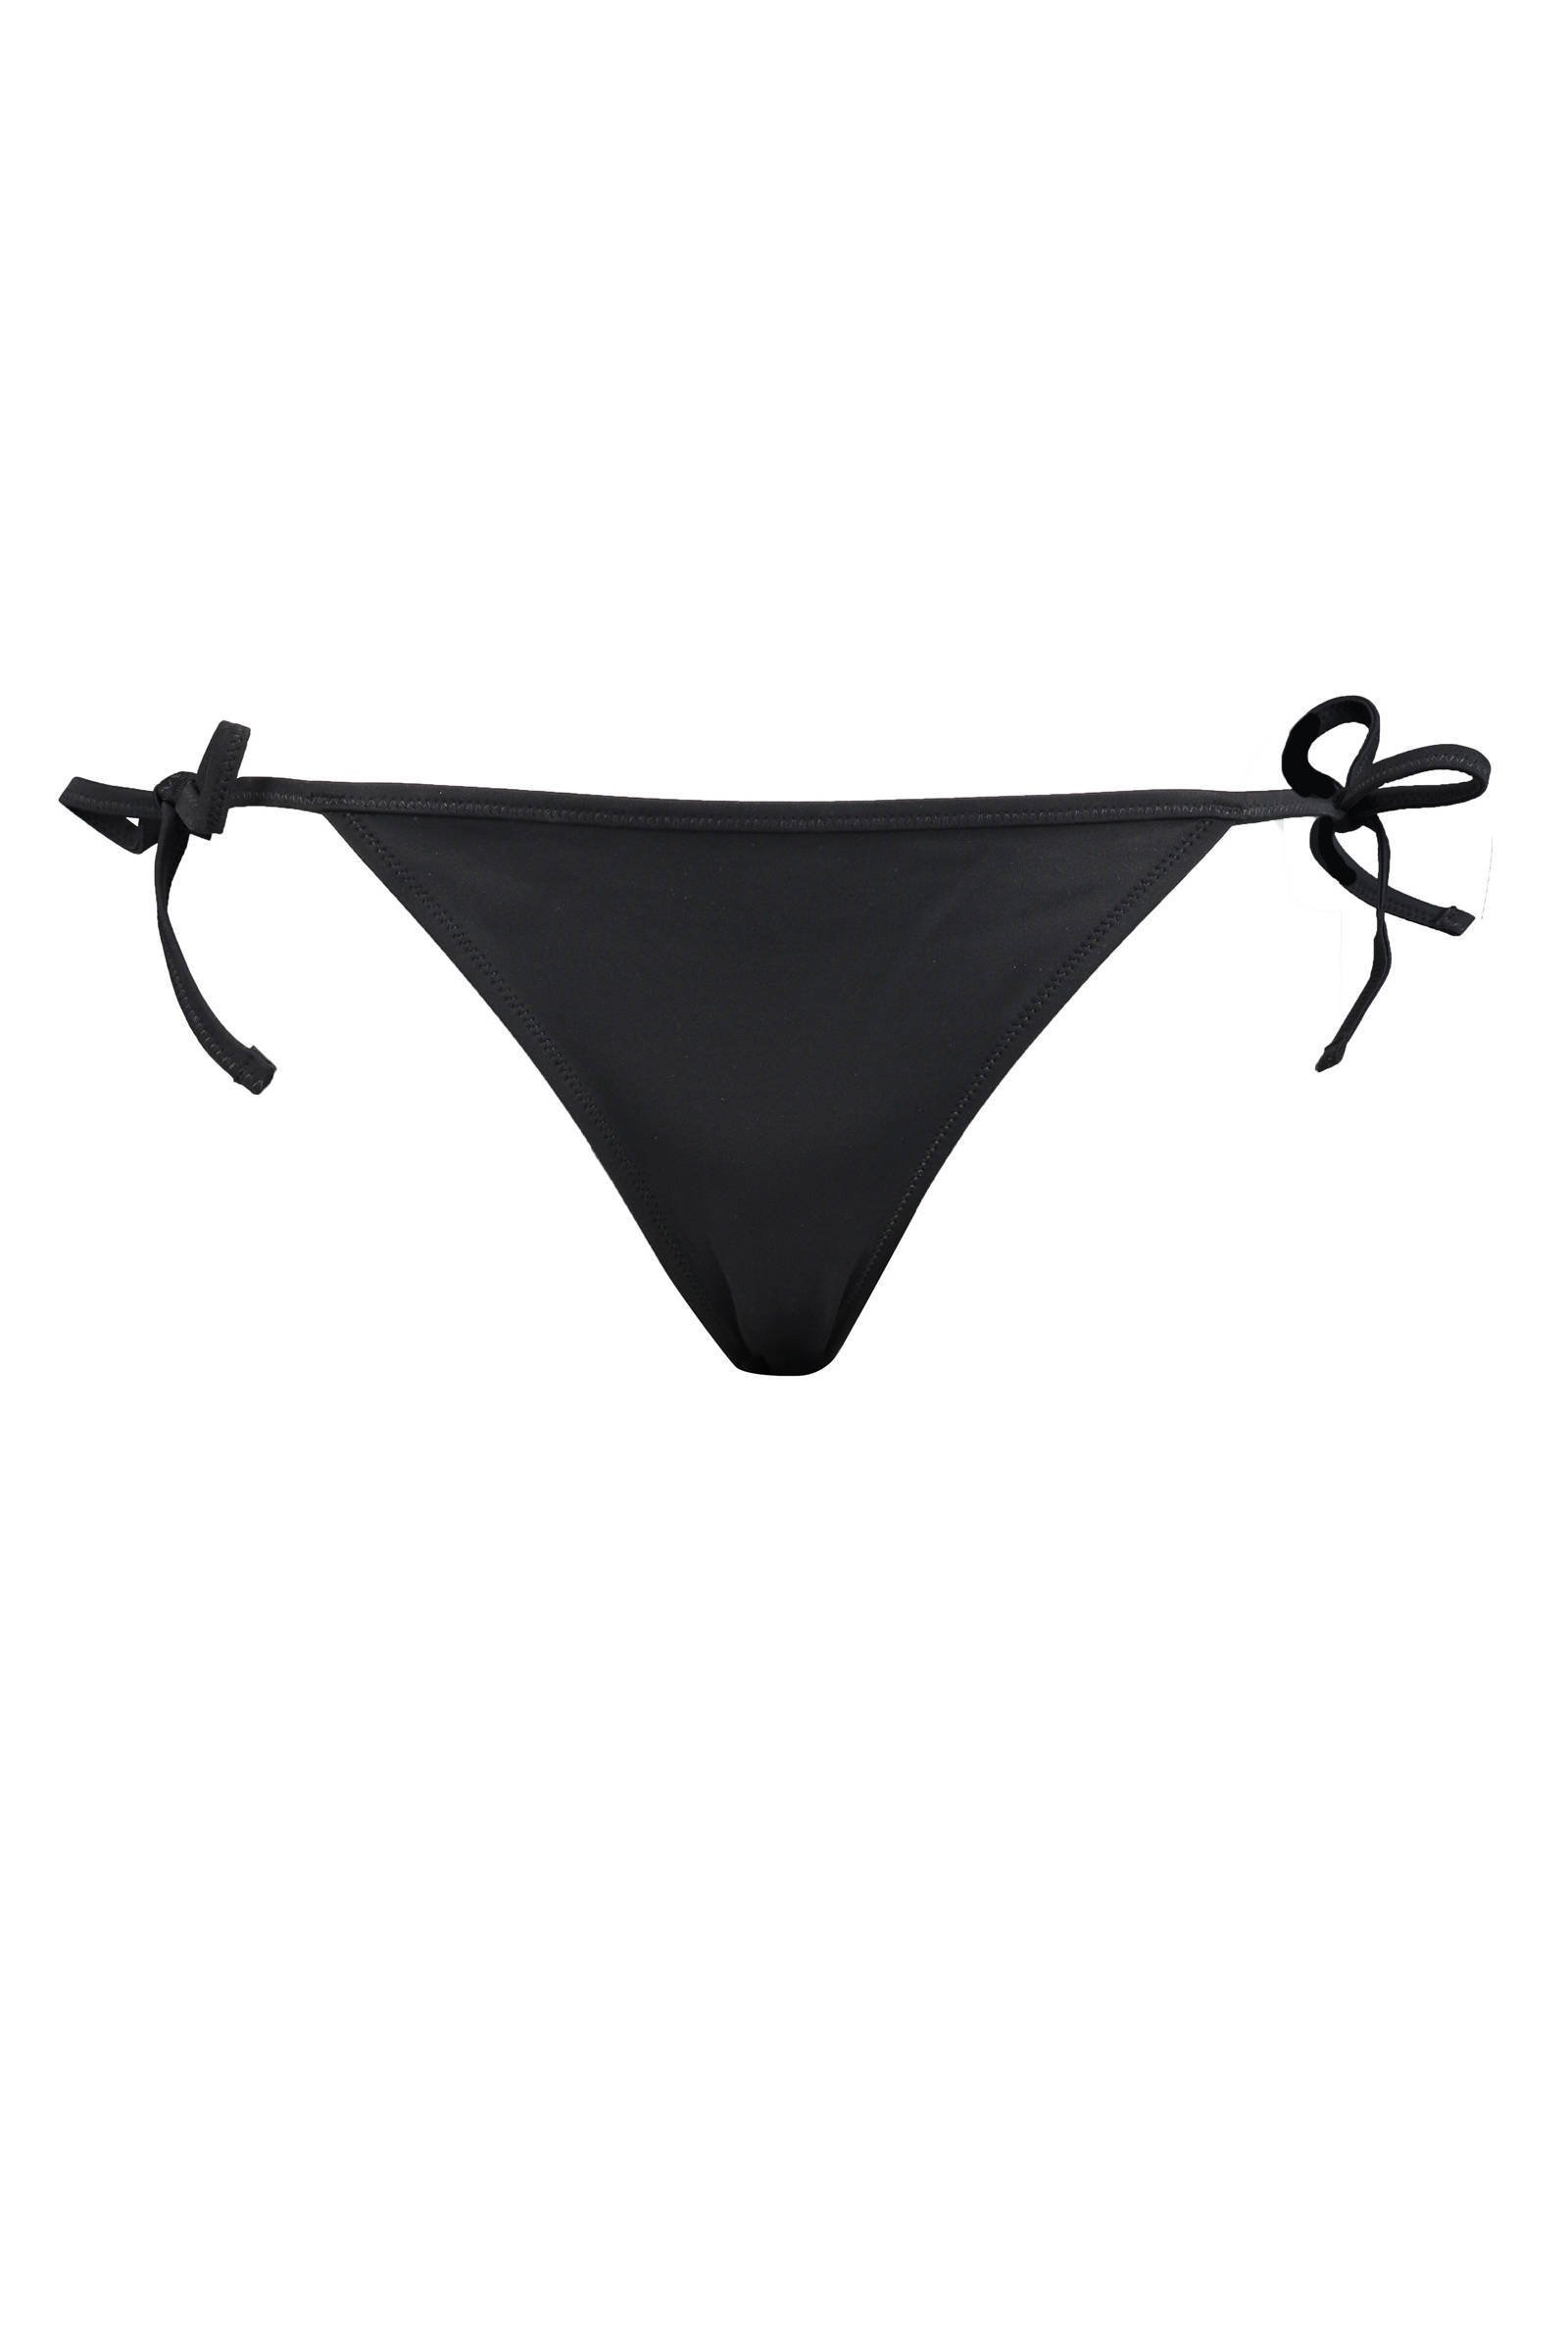 Puma Bikinis Swim Side Tie Bikini Bottom Zwart online kopen